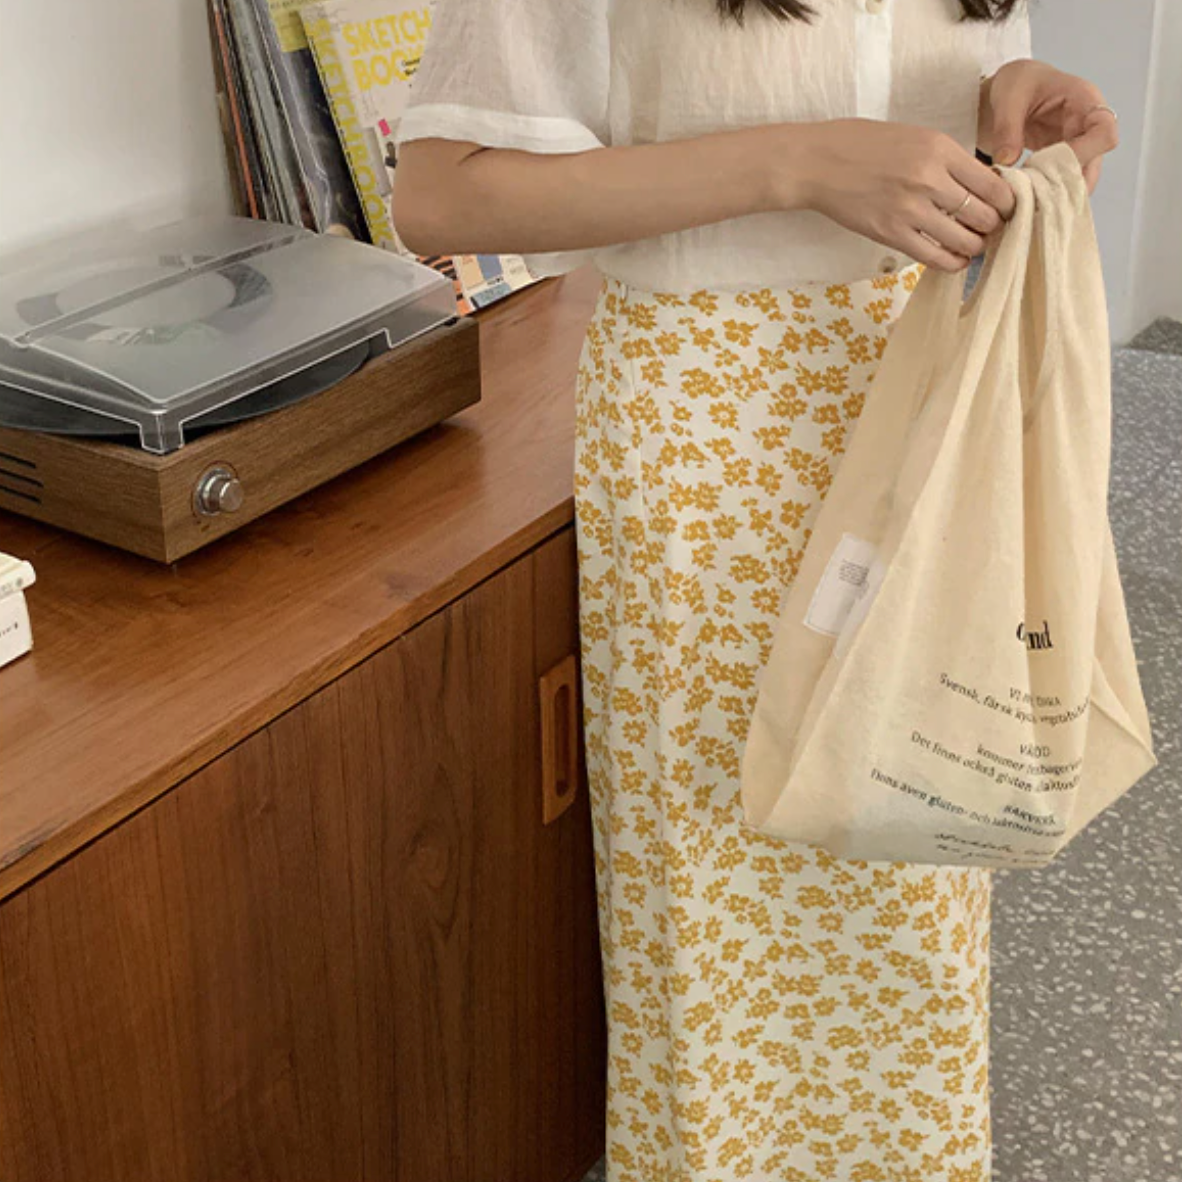 [Korean Style] 4 Colors Floral Print Cinched Waist A-Line Skirt